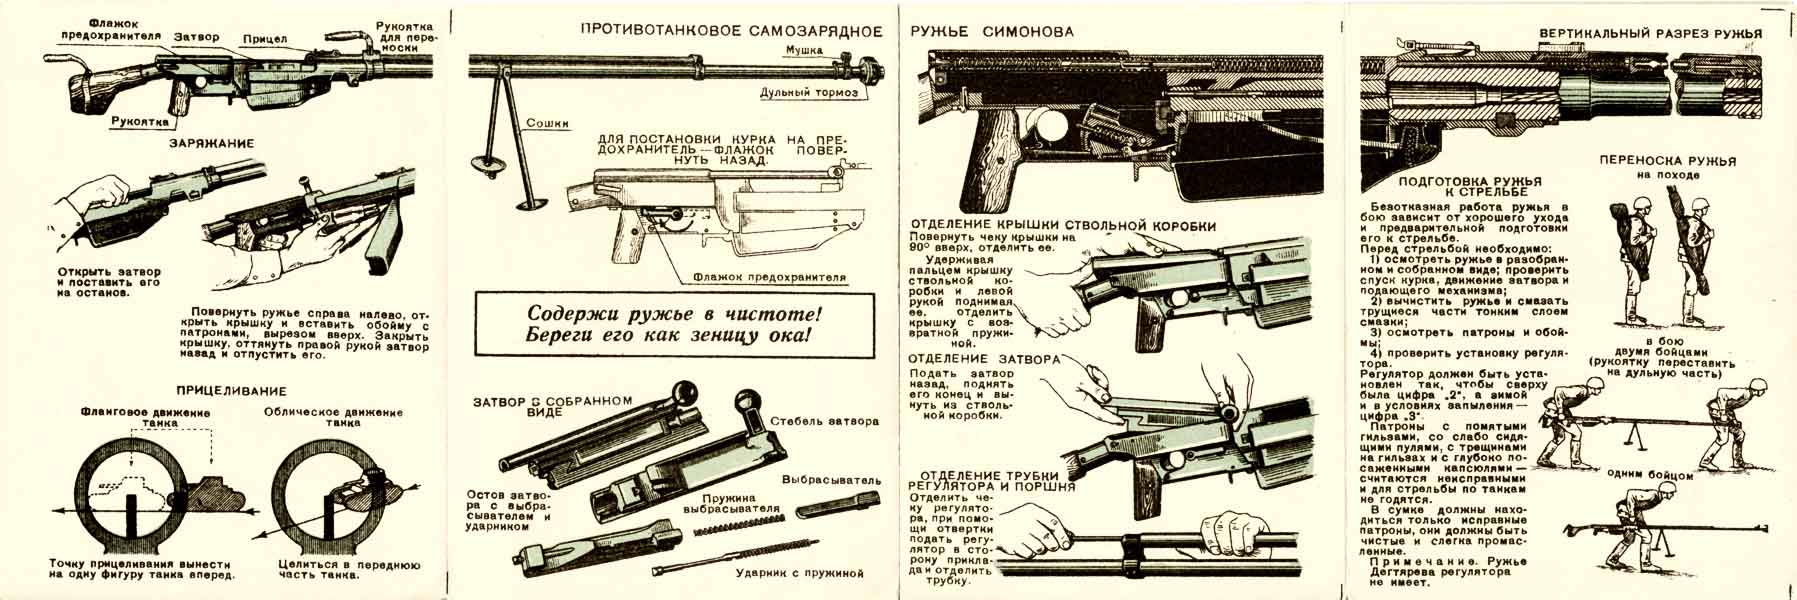 Противотанковые ружья птрд-41 и птрс-41. характеристики, фото, описание